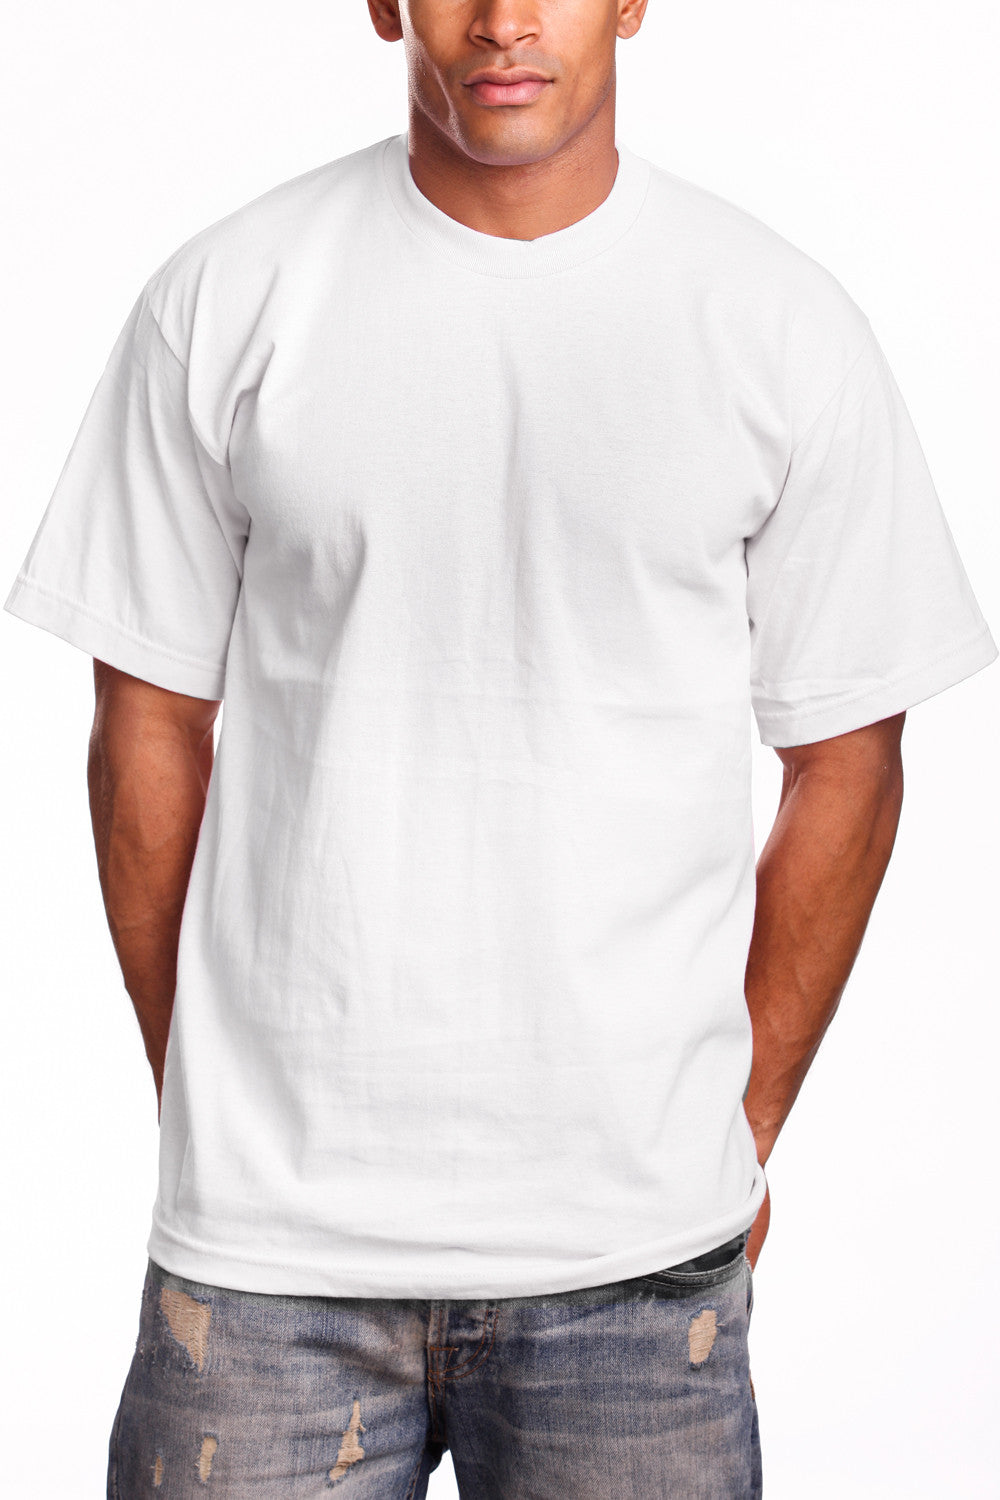 Athletic T-Shirts – 5